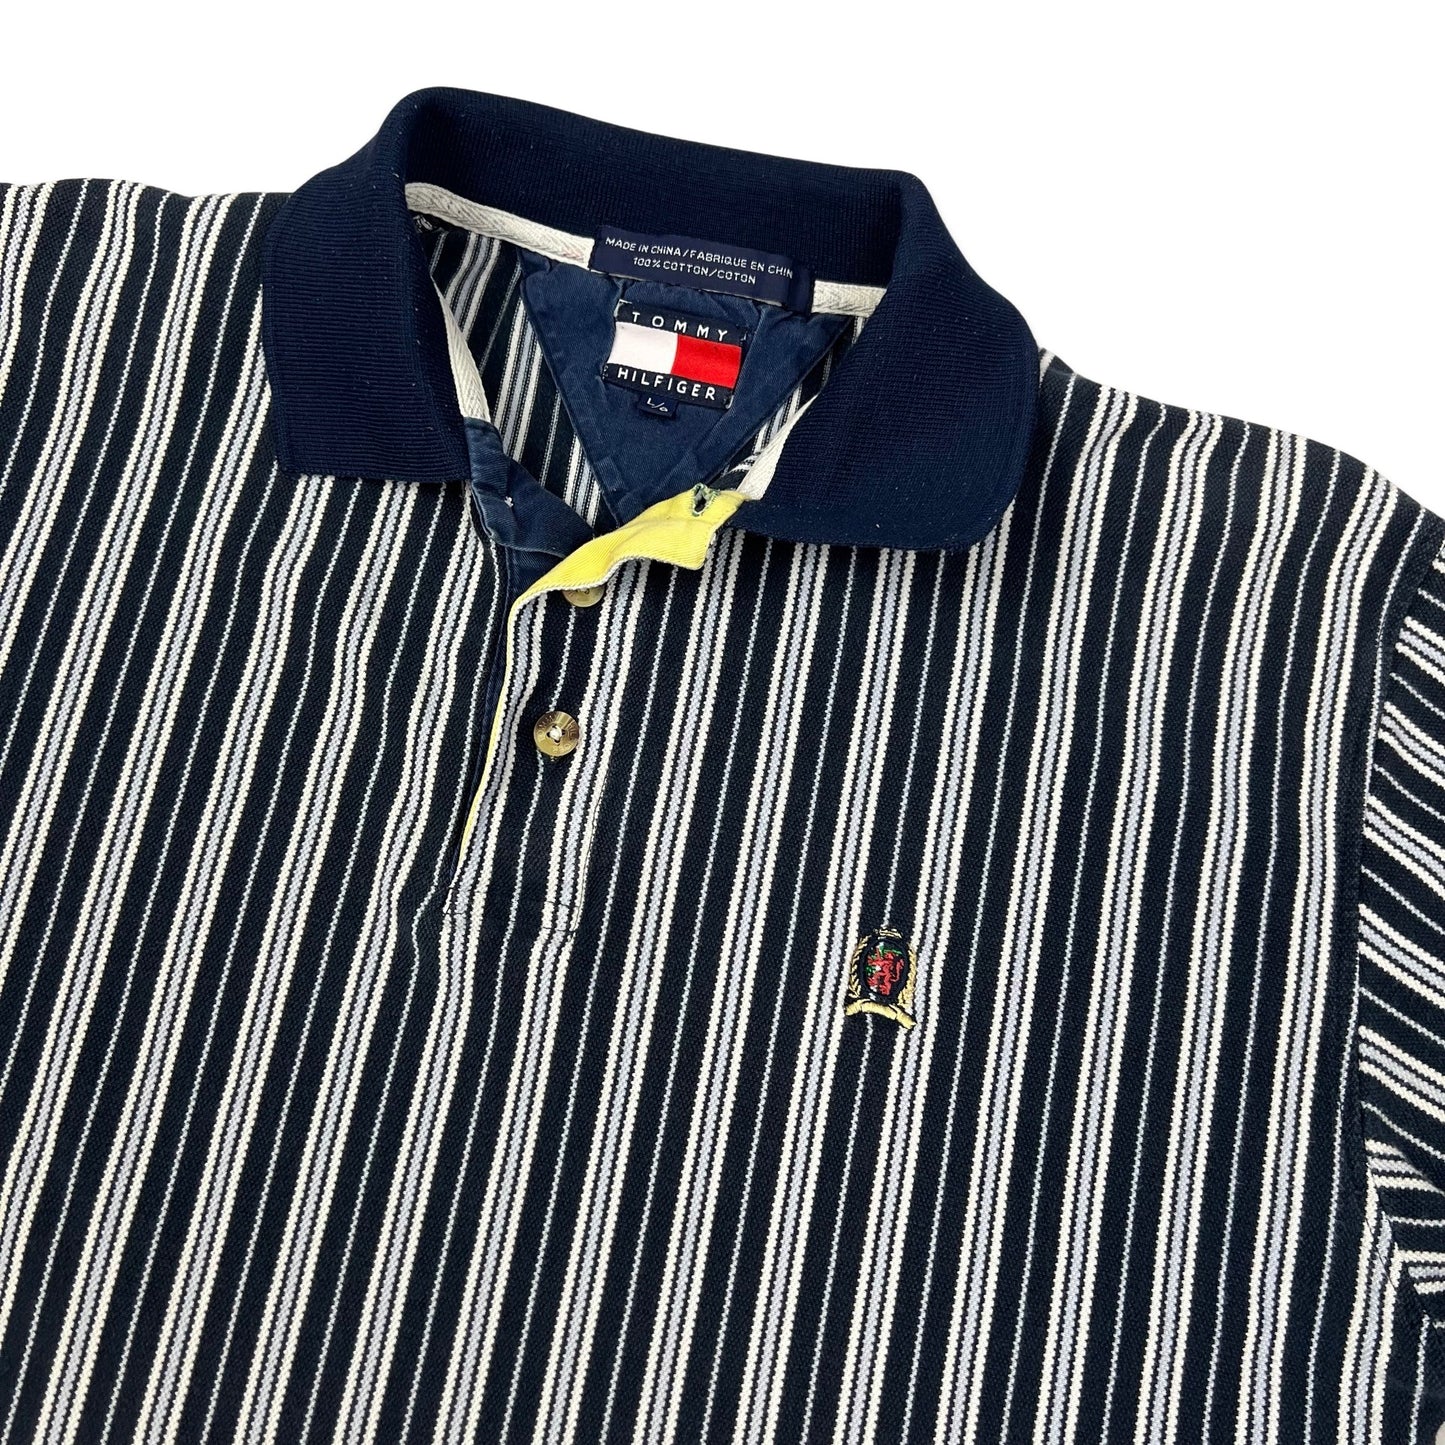 Vintage 90s Tommy Hilfiger Blue & Navy Striped Polo Shirt S M